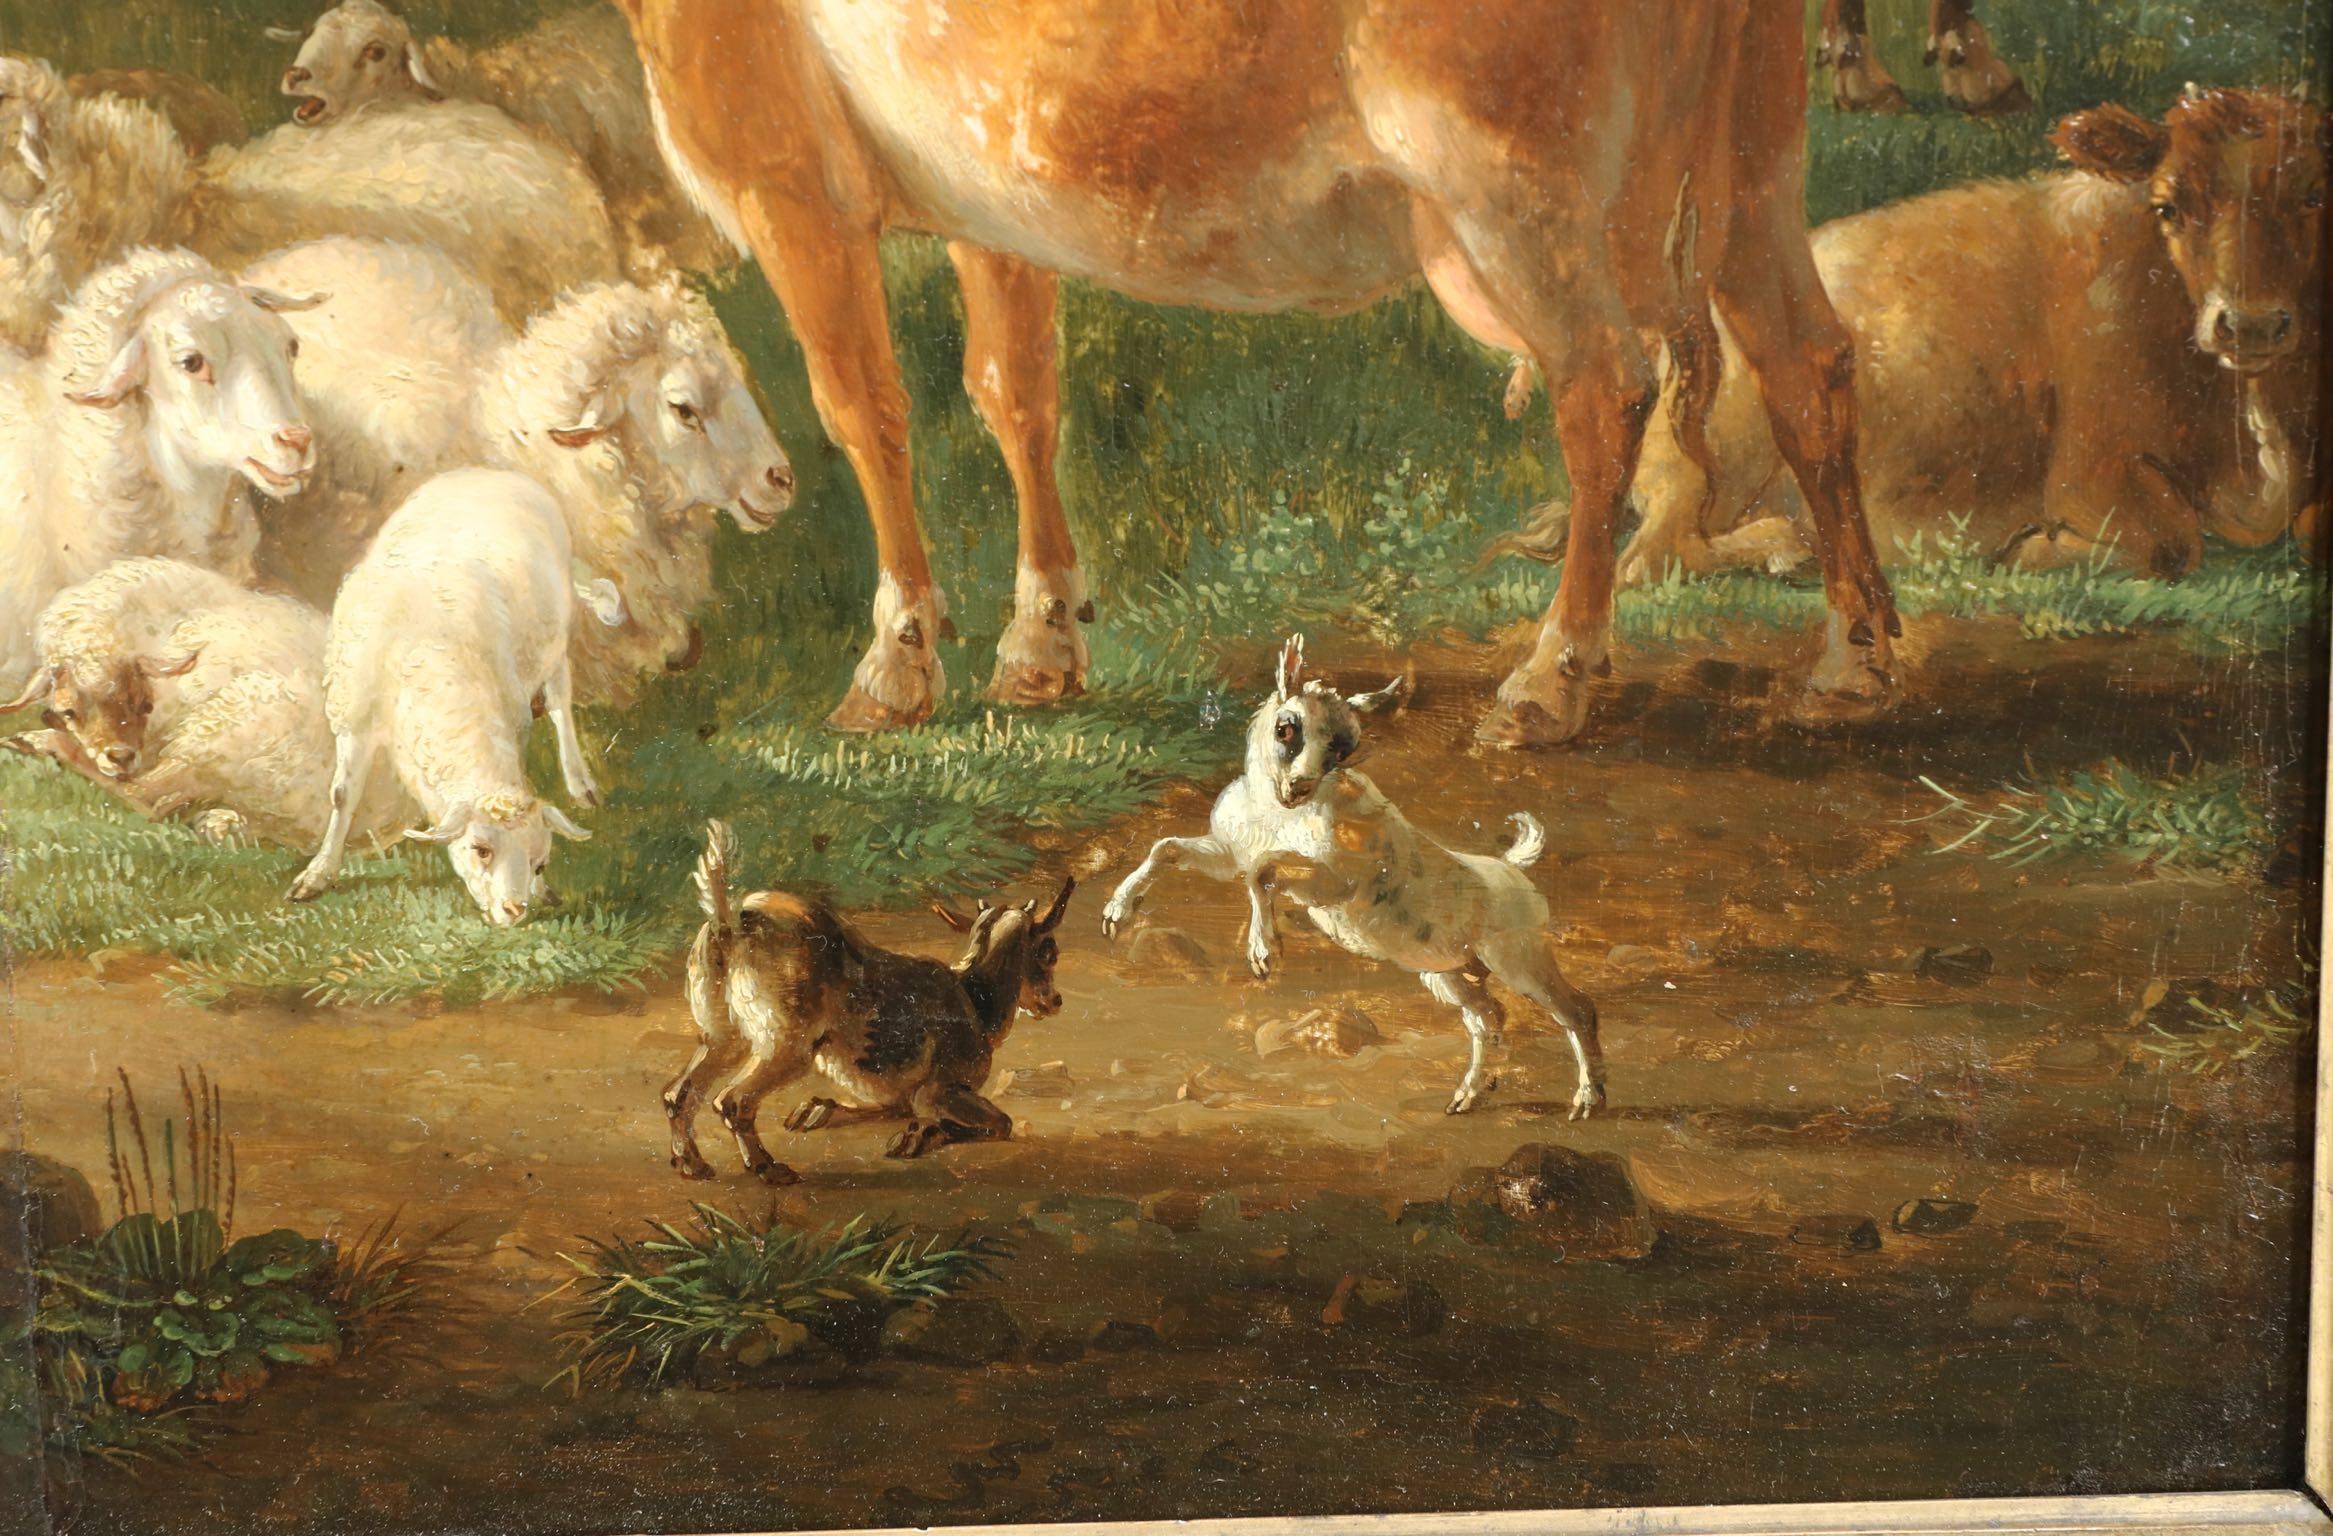 Wood Belgian Landscape Painting of Cattle & Sheep by Jean-Baptiste De Roy, circa 1798